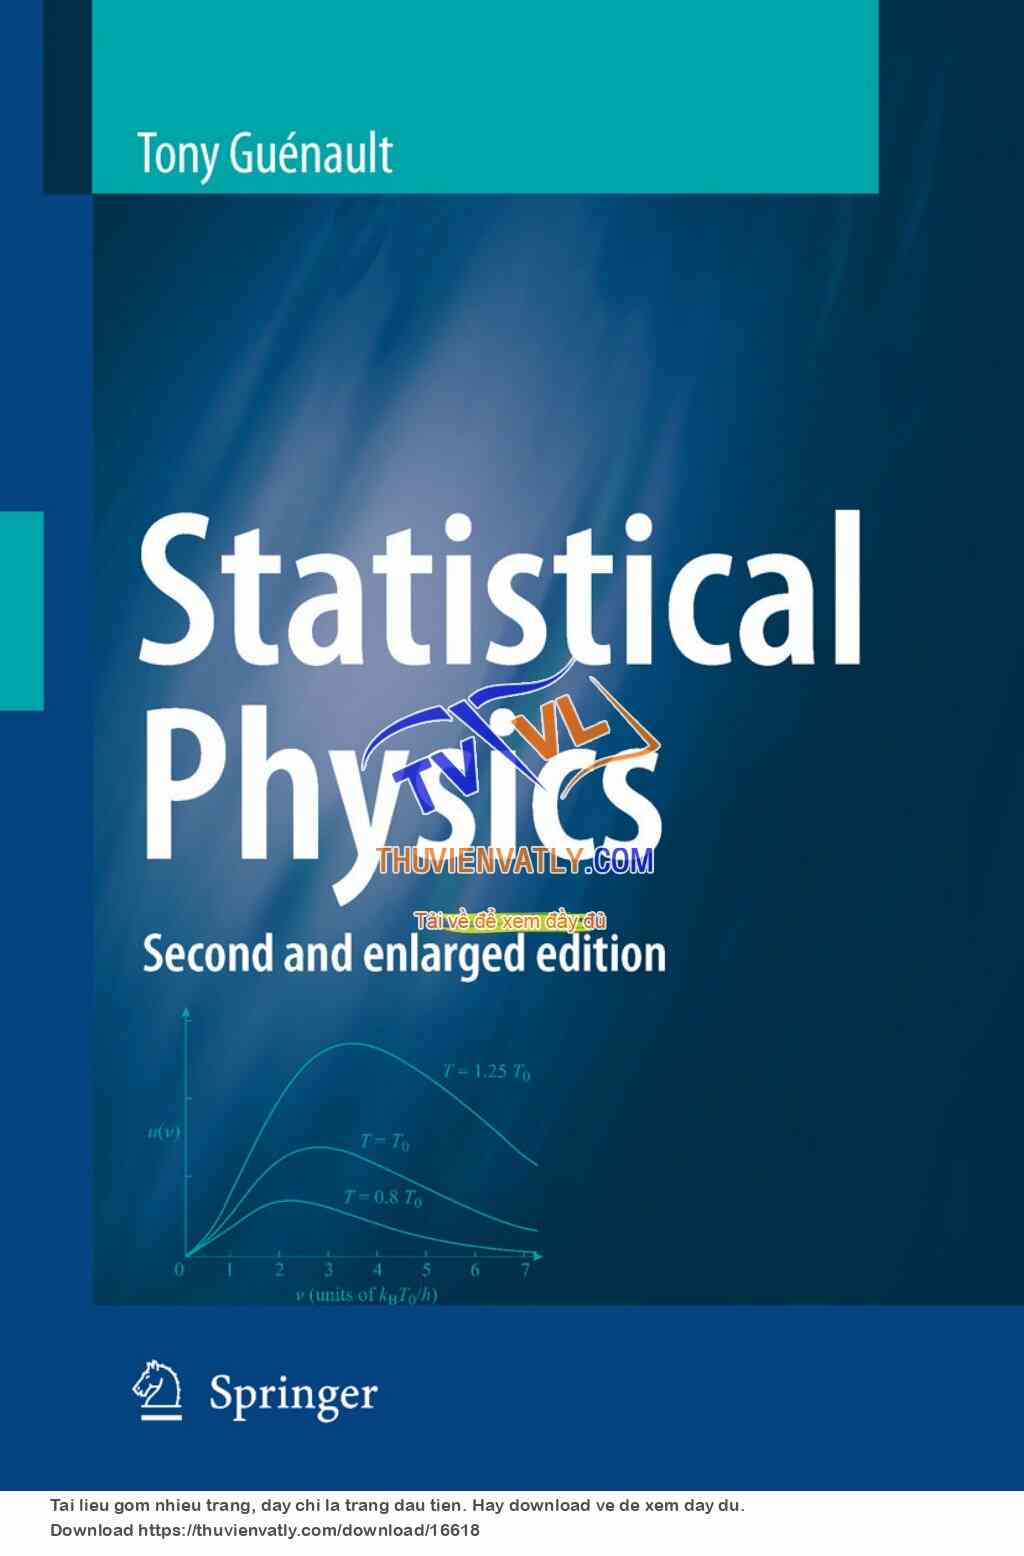 Statistical-Physics (Tony Genault, Springer  2007)